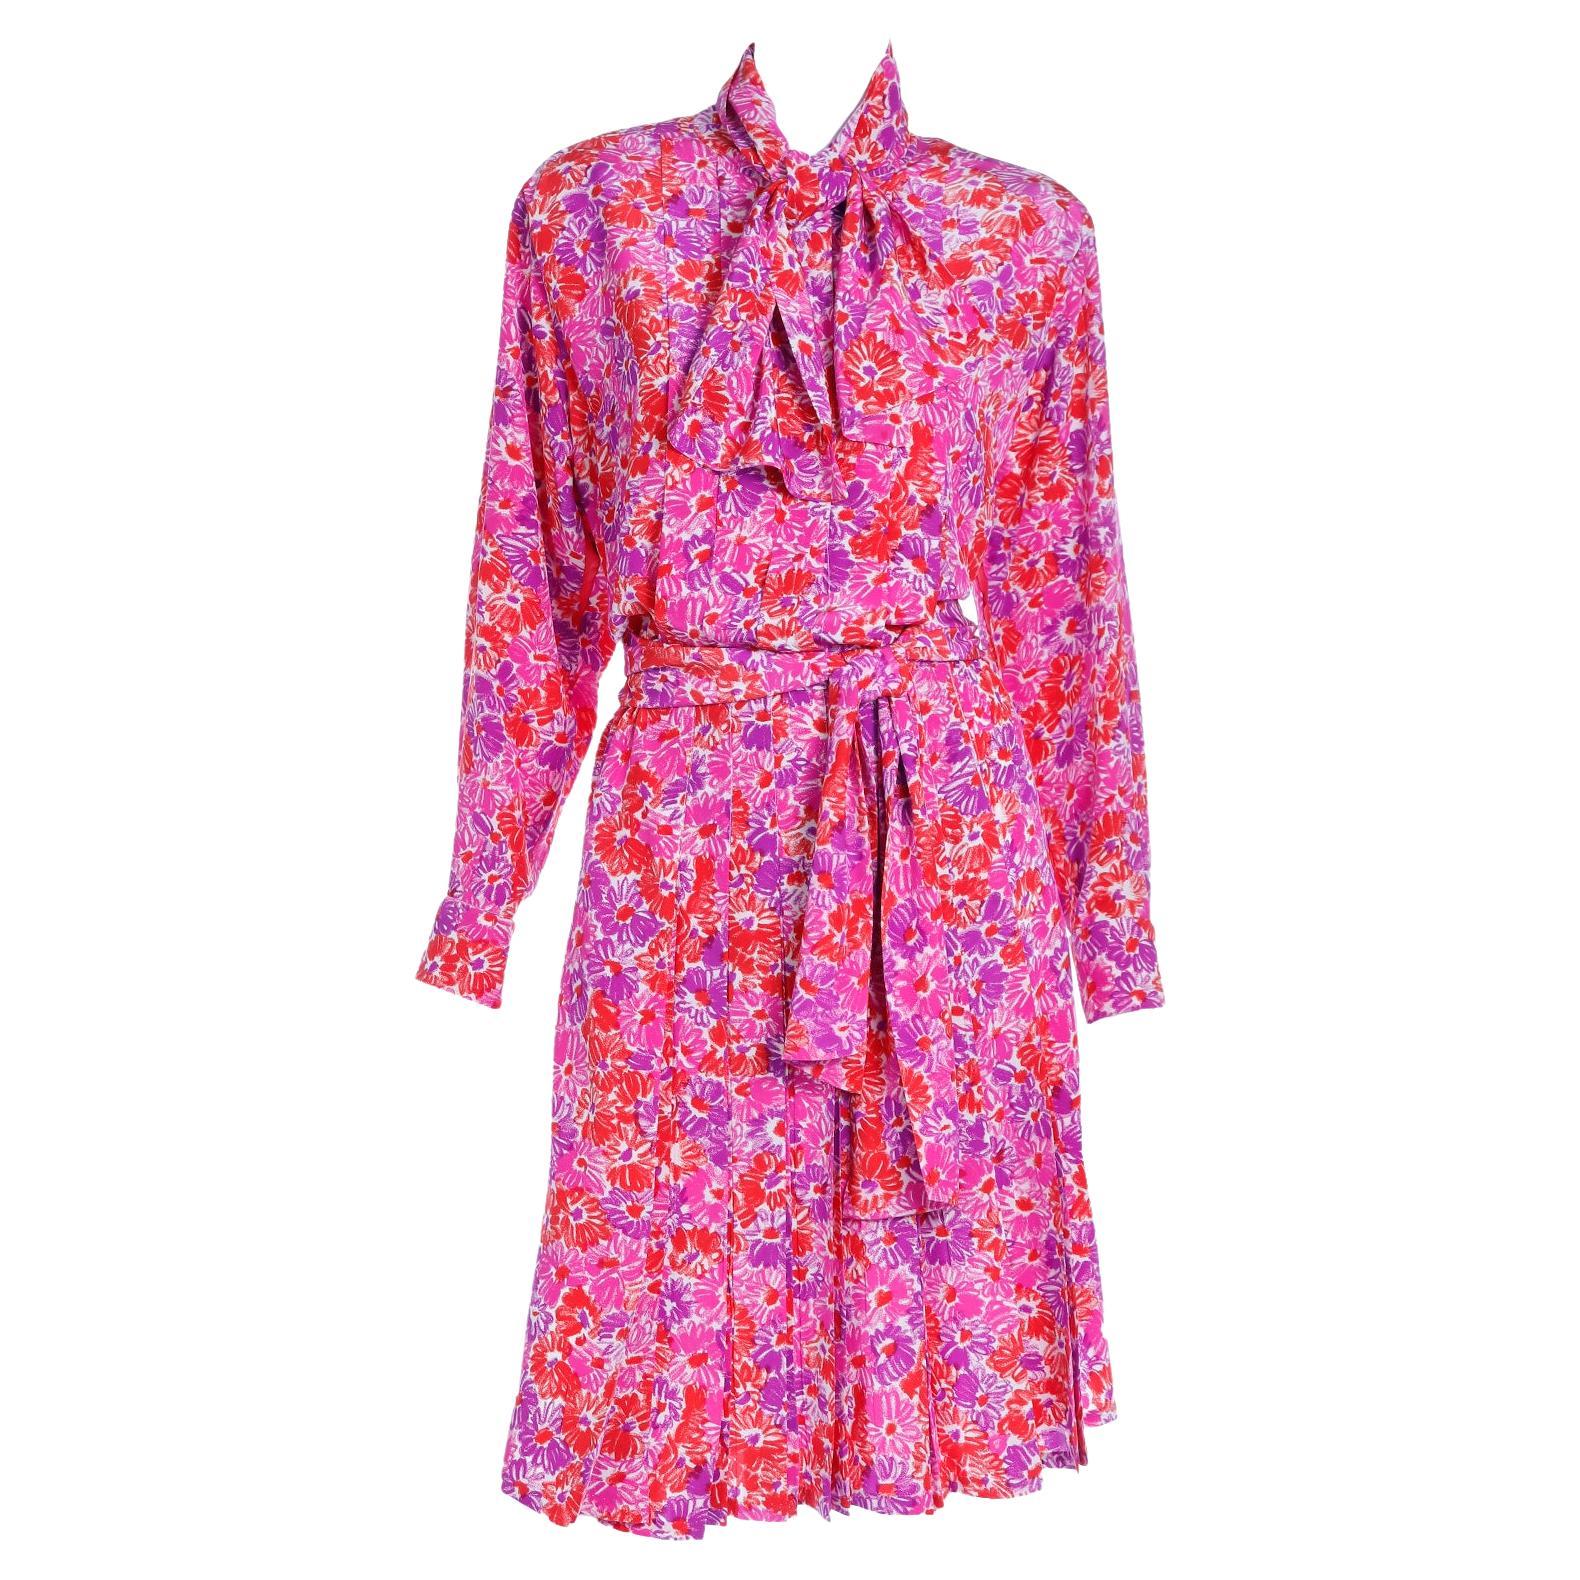 Yves Saint Laurent S/S 1989 Vintage Colorful Pink Floral Silk YSL Runway Dress For Sale